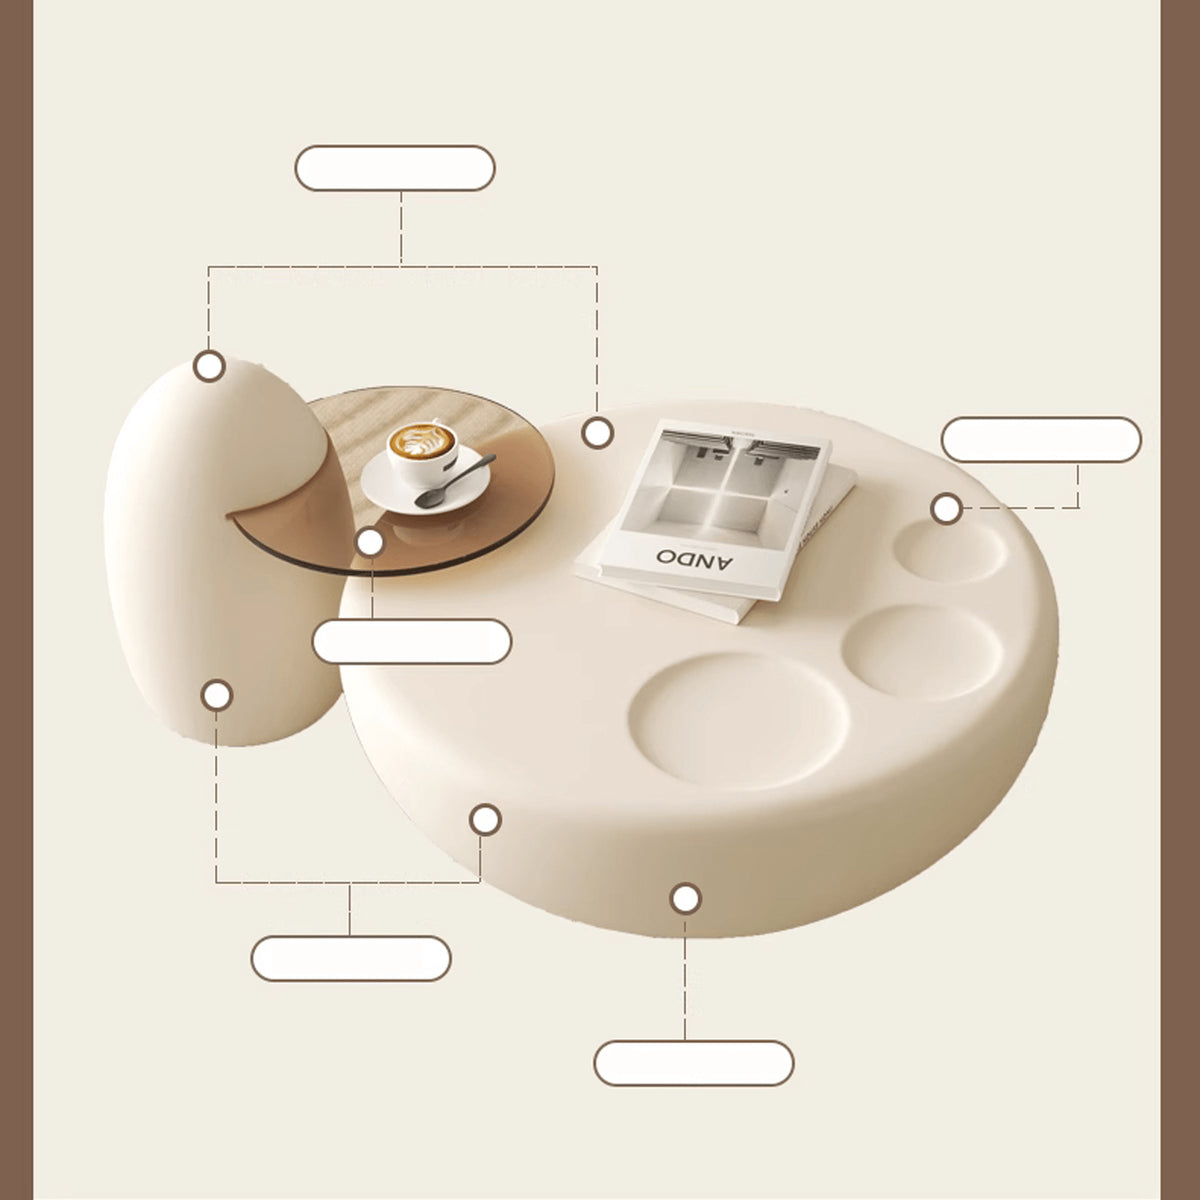 Sleek White Tea Table – Modern Elegance for Your Living Room Décor yw-195